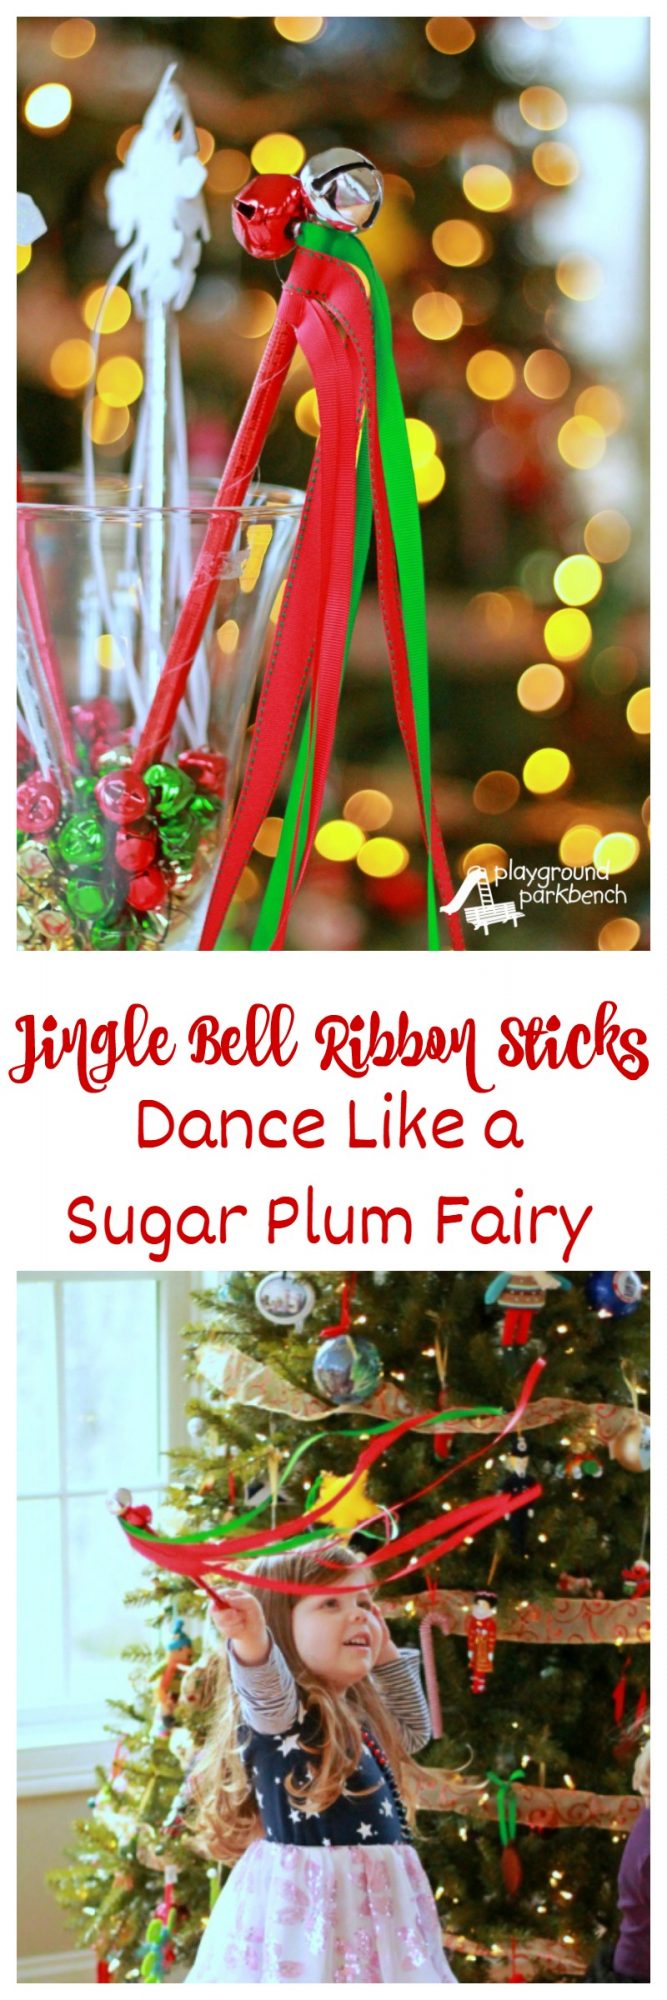 Jingle Bell Ribbon Sticks - Dance Like a Sugar Plum Fairy